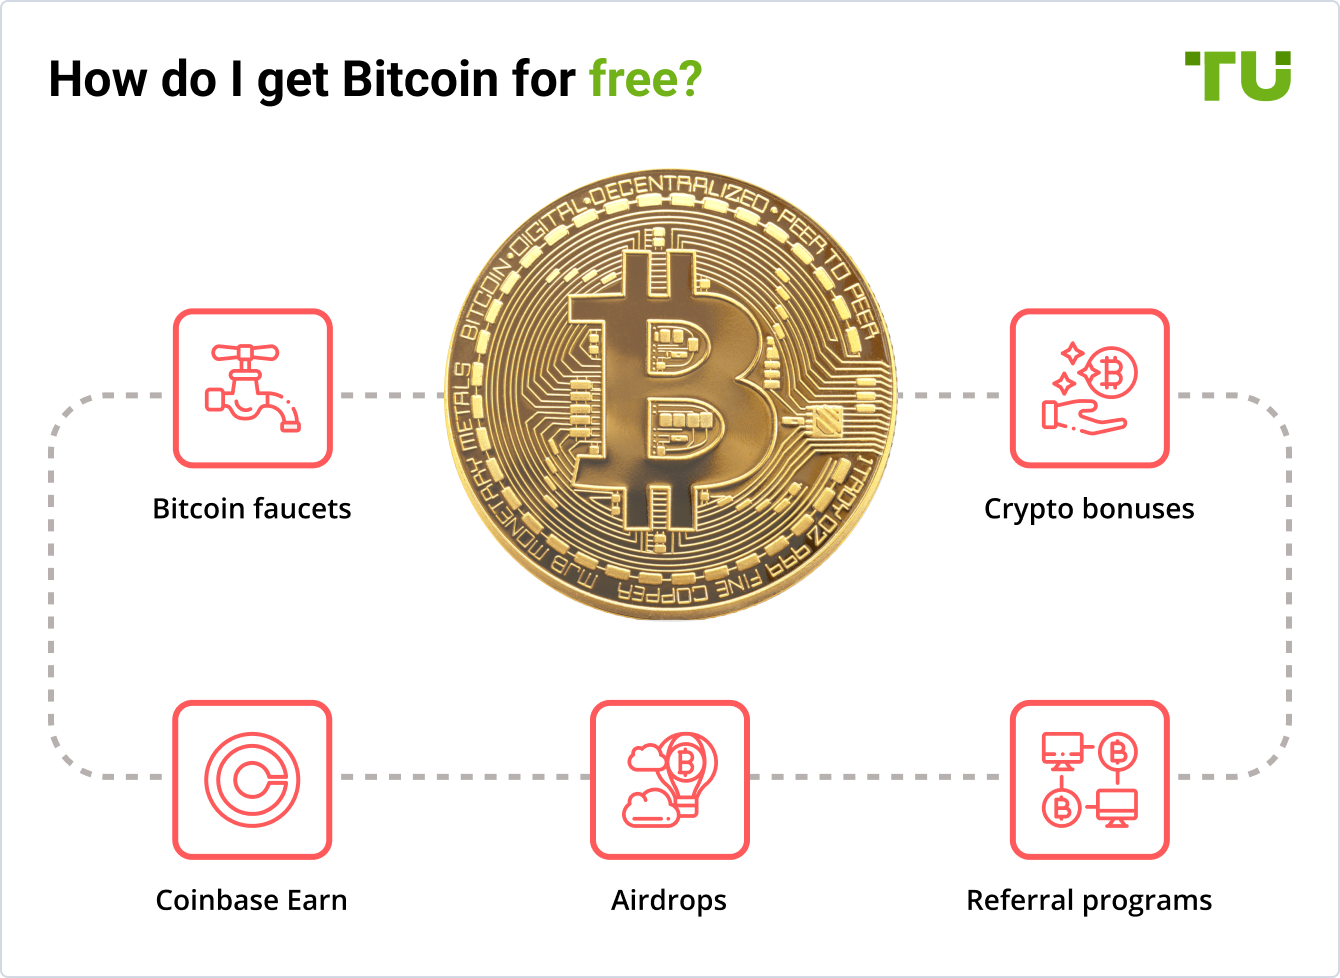 How do I get Bitcoin for free?